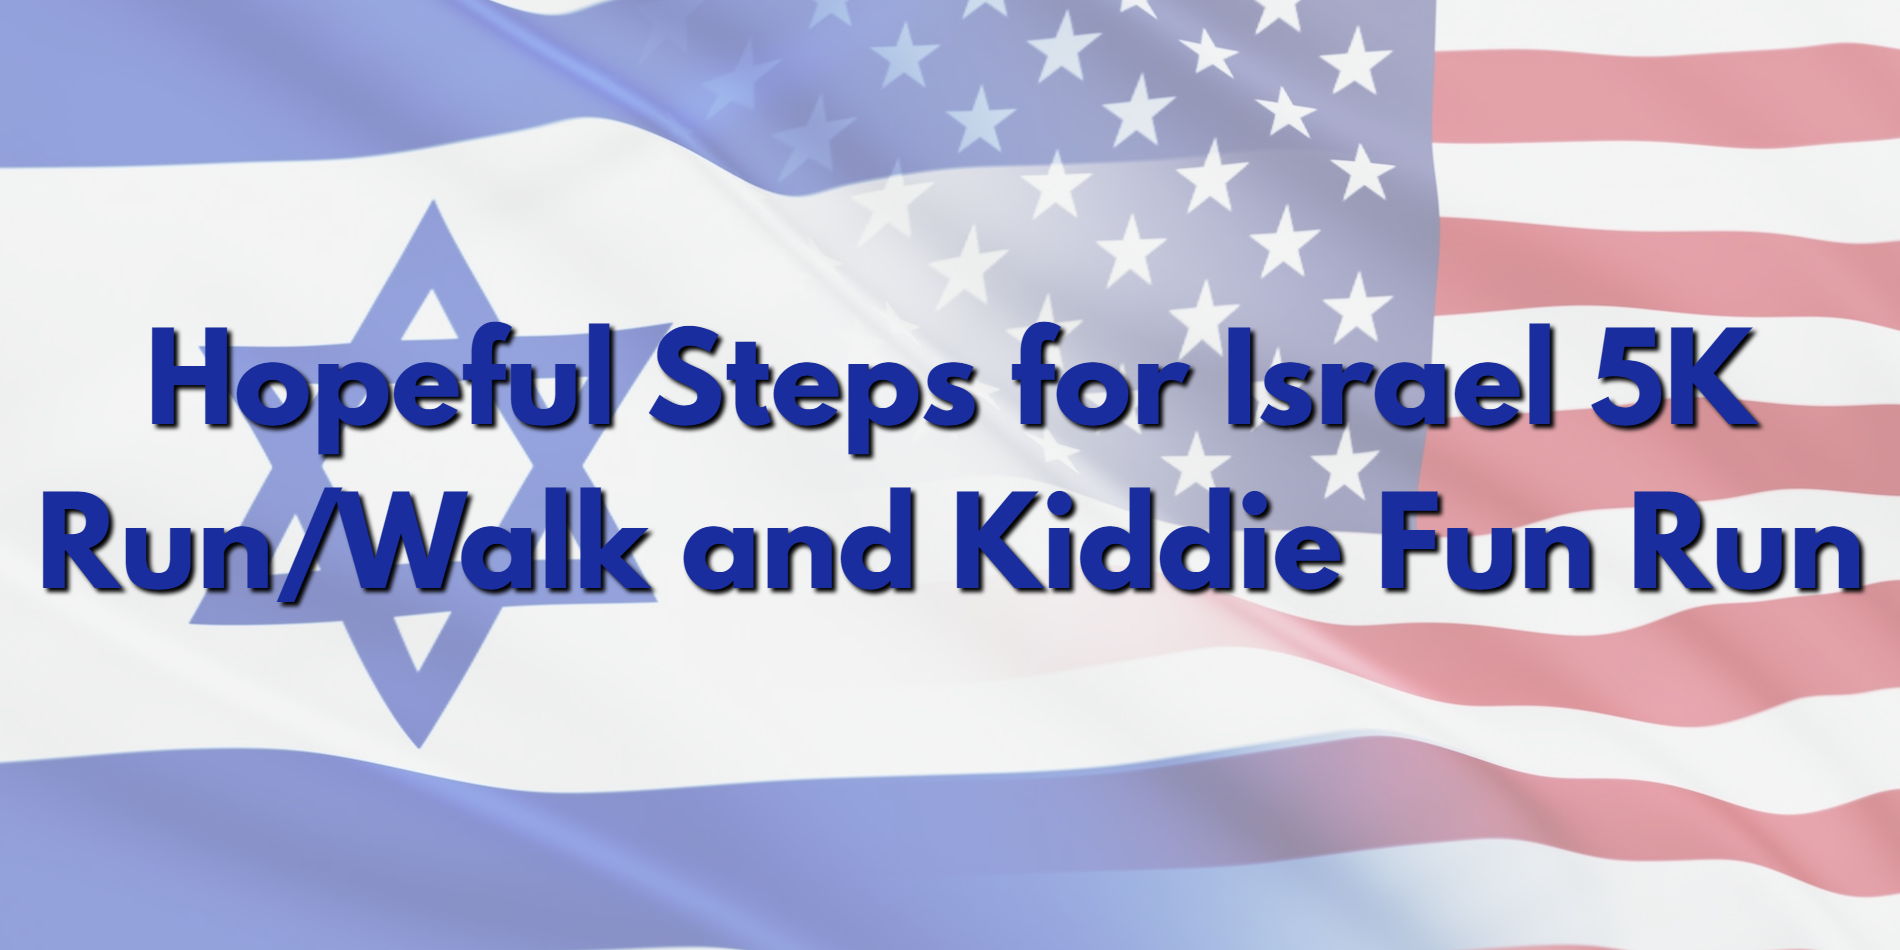 Hopeful Steps for Israel 5K Run/Walk and Kiddie Fun Run promotional image